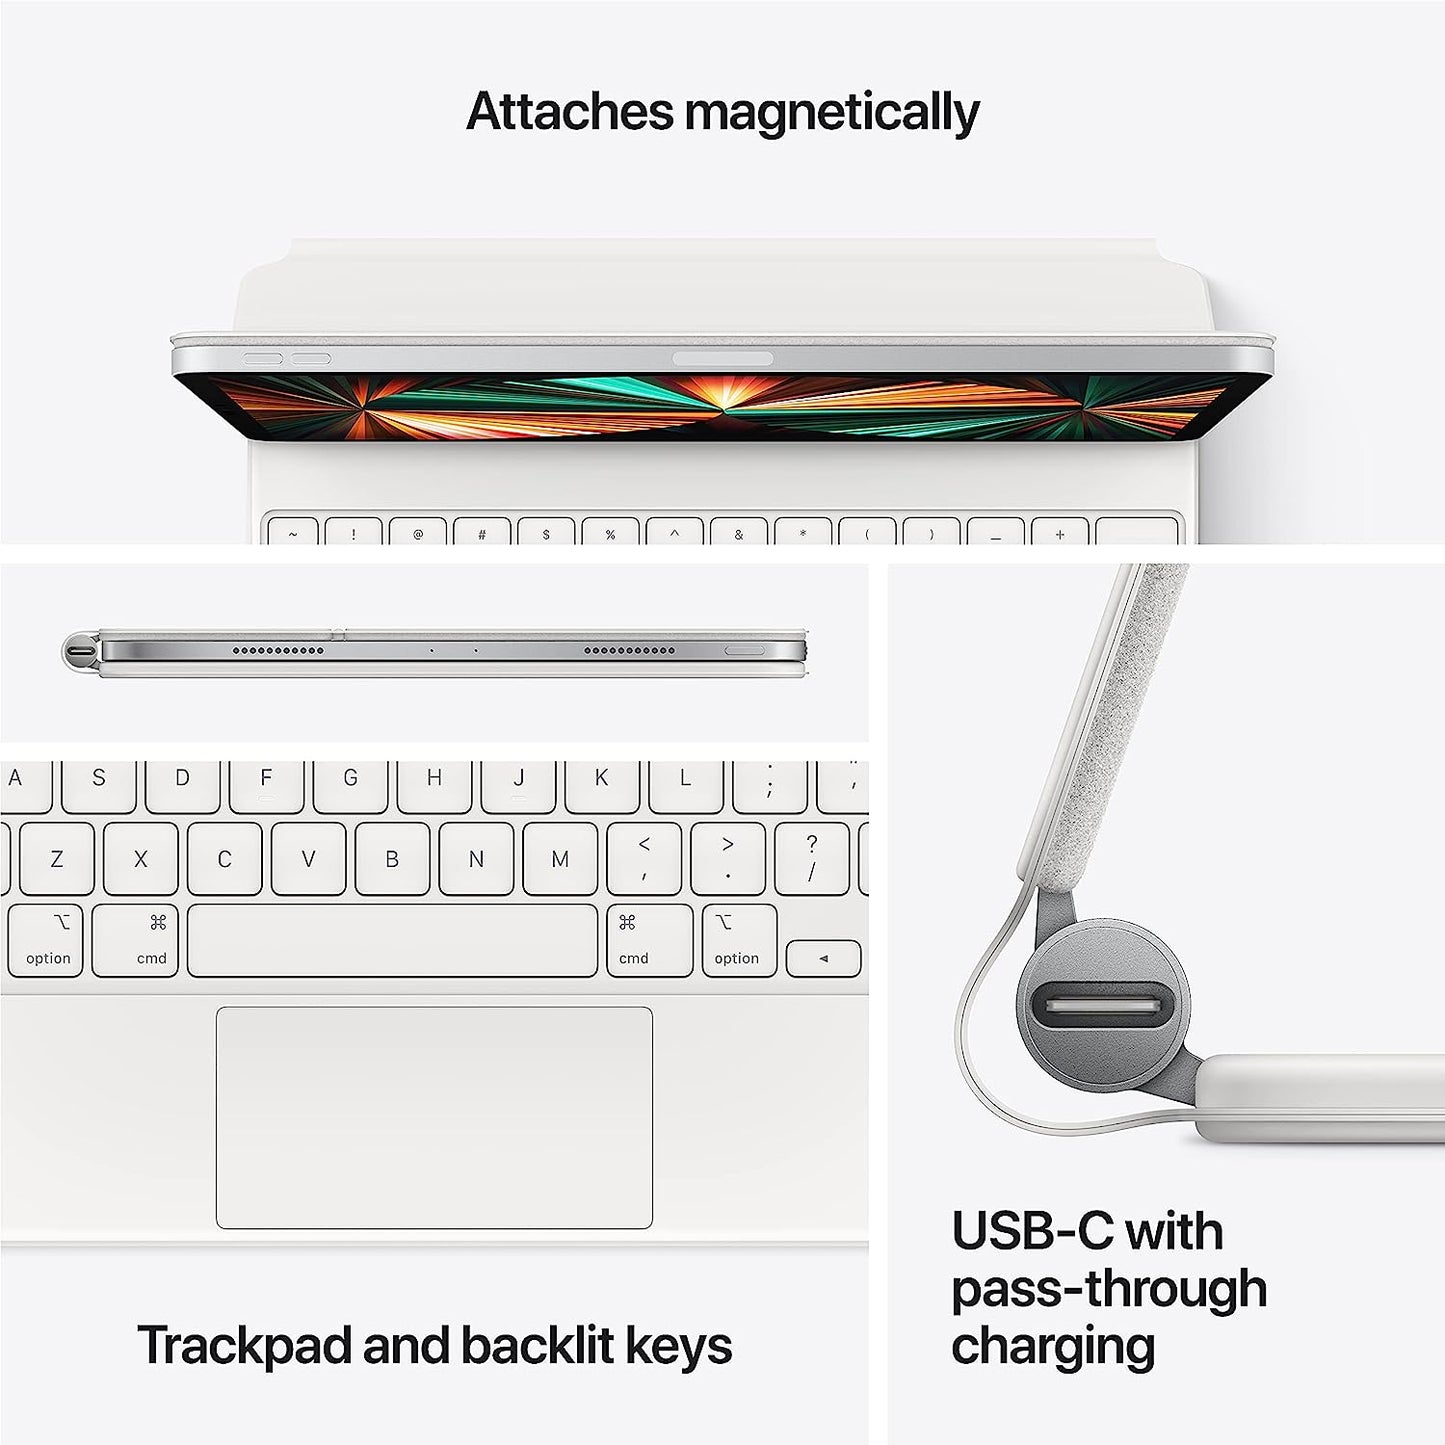 Magic Keyboard for iPad Pro 11-inch (4th generation) and iPad Air (5th generation) - International English - White